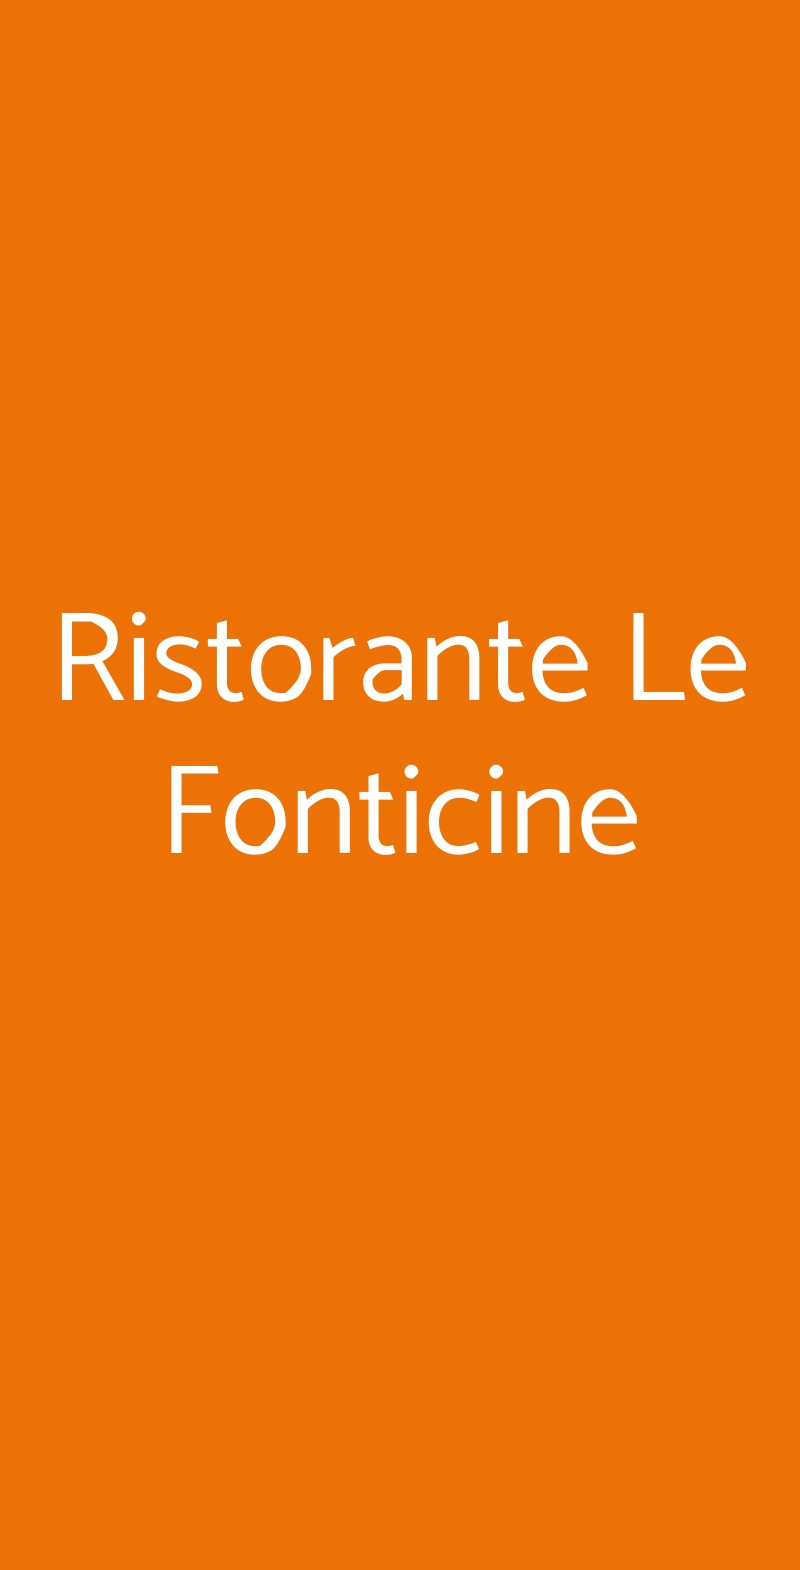 Ristorante Le Fonticine Firenze menù 1 pagina